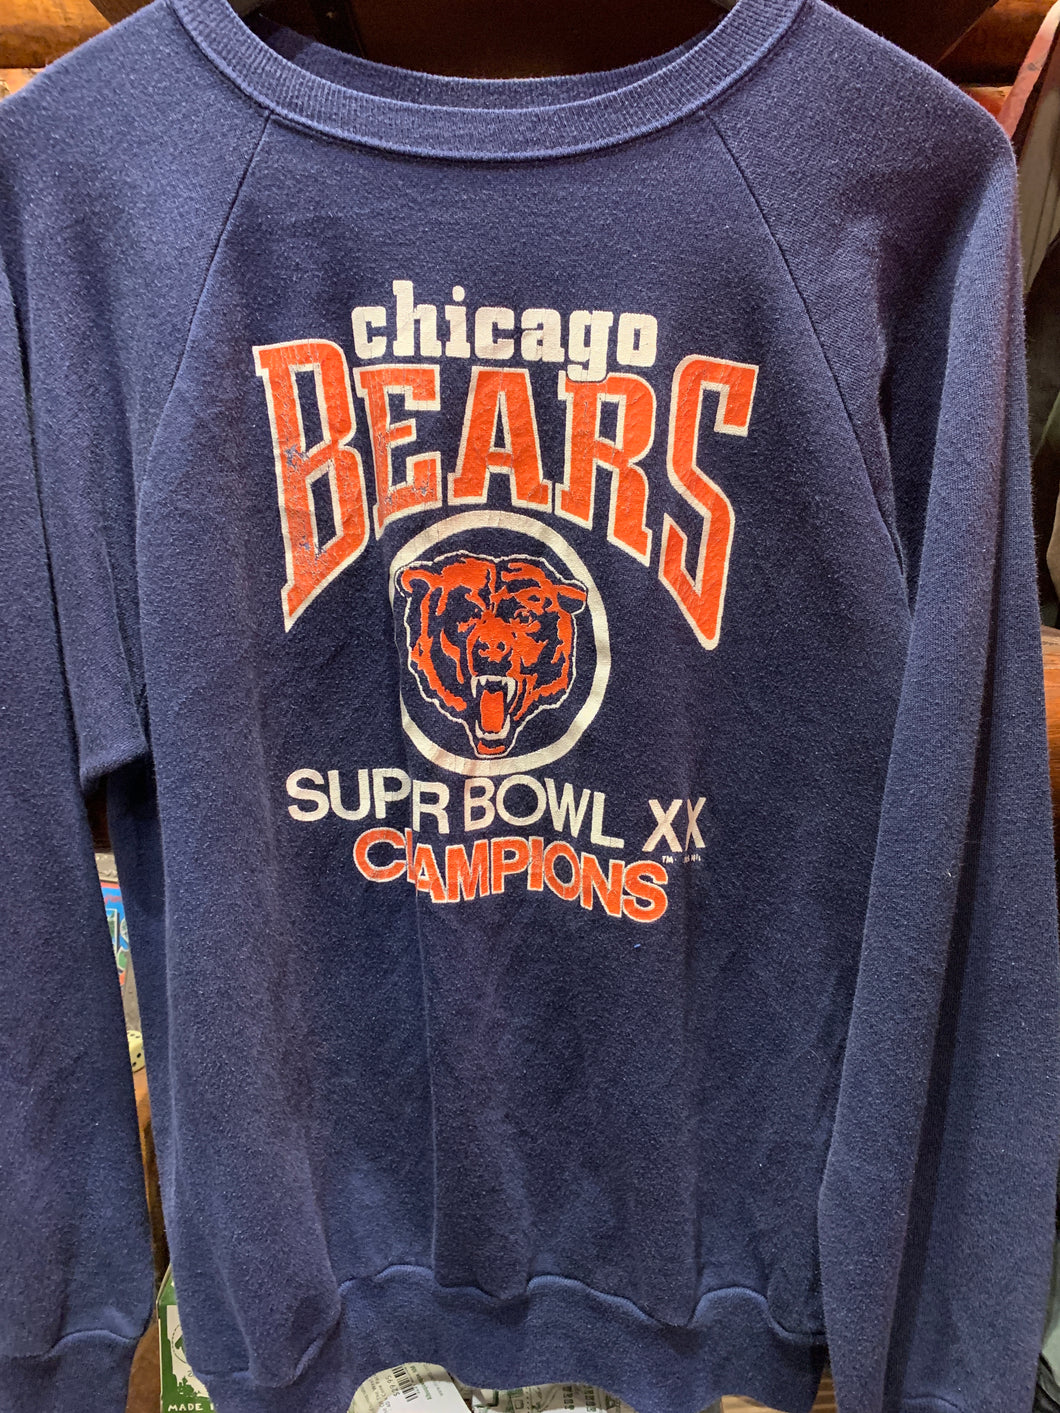 Vintage Chicago Bears Superbowl Sweater, Small - Medium